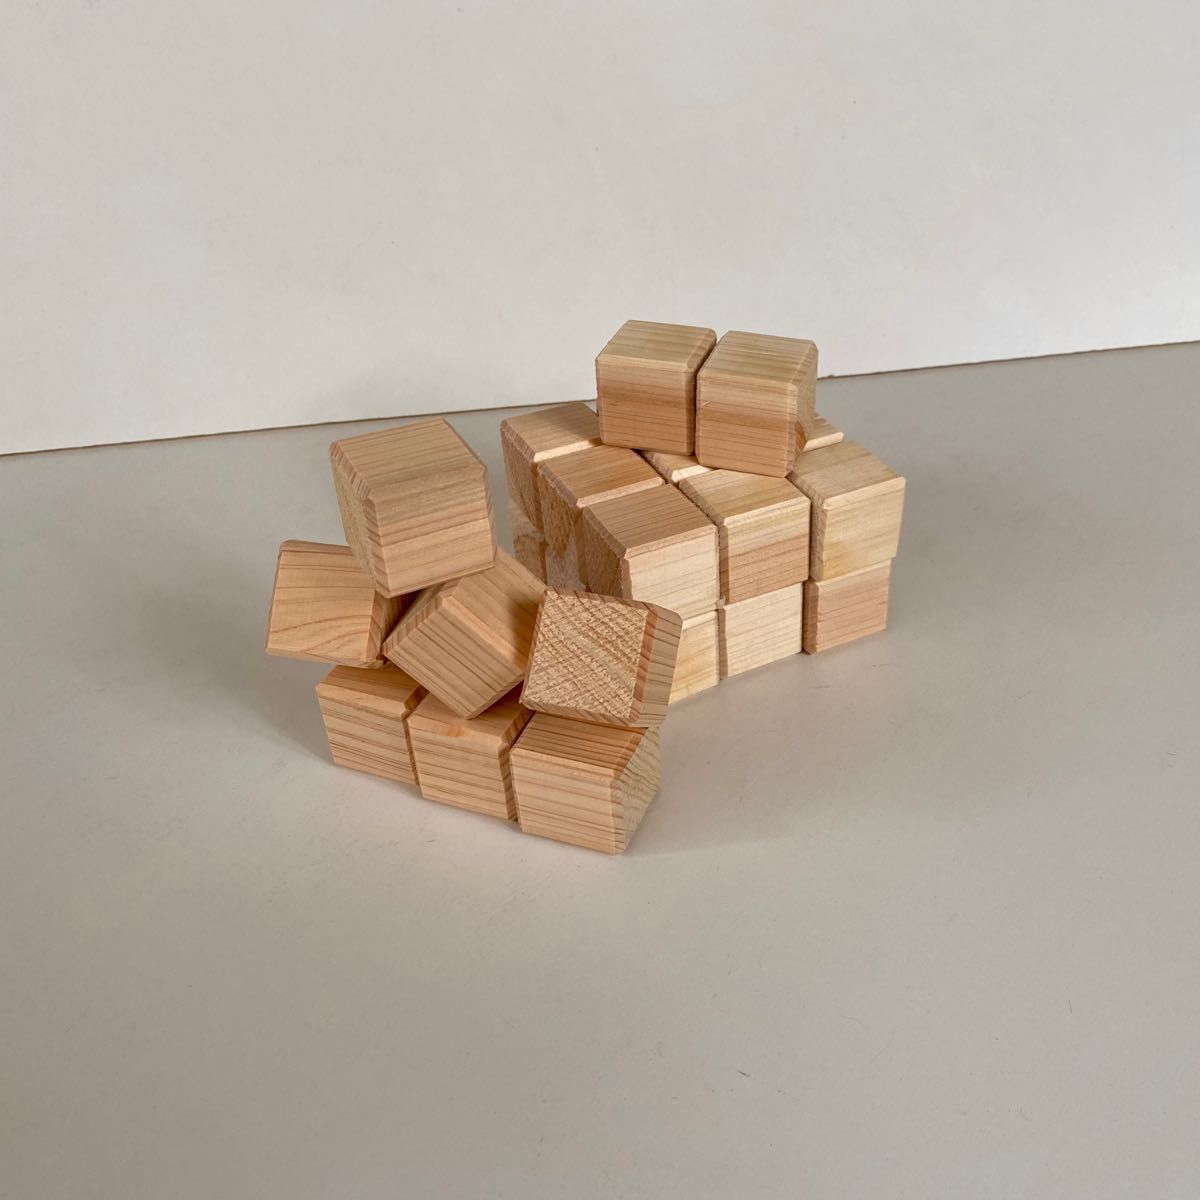 ②  3cm角　ヒノキ　キューブ　ブロック27個　積み木　図形　パズル　立方体　立体　木製玩具　木製パズル